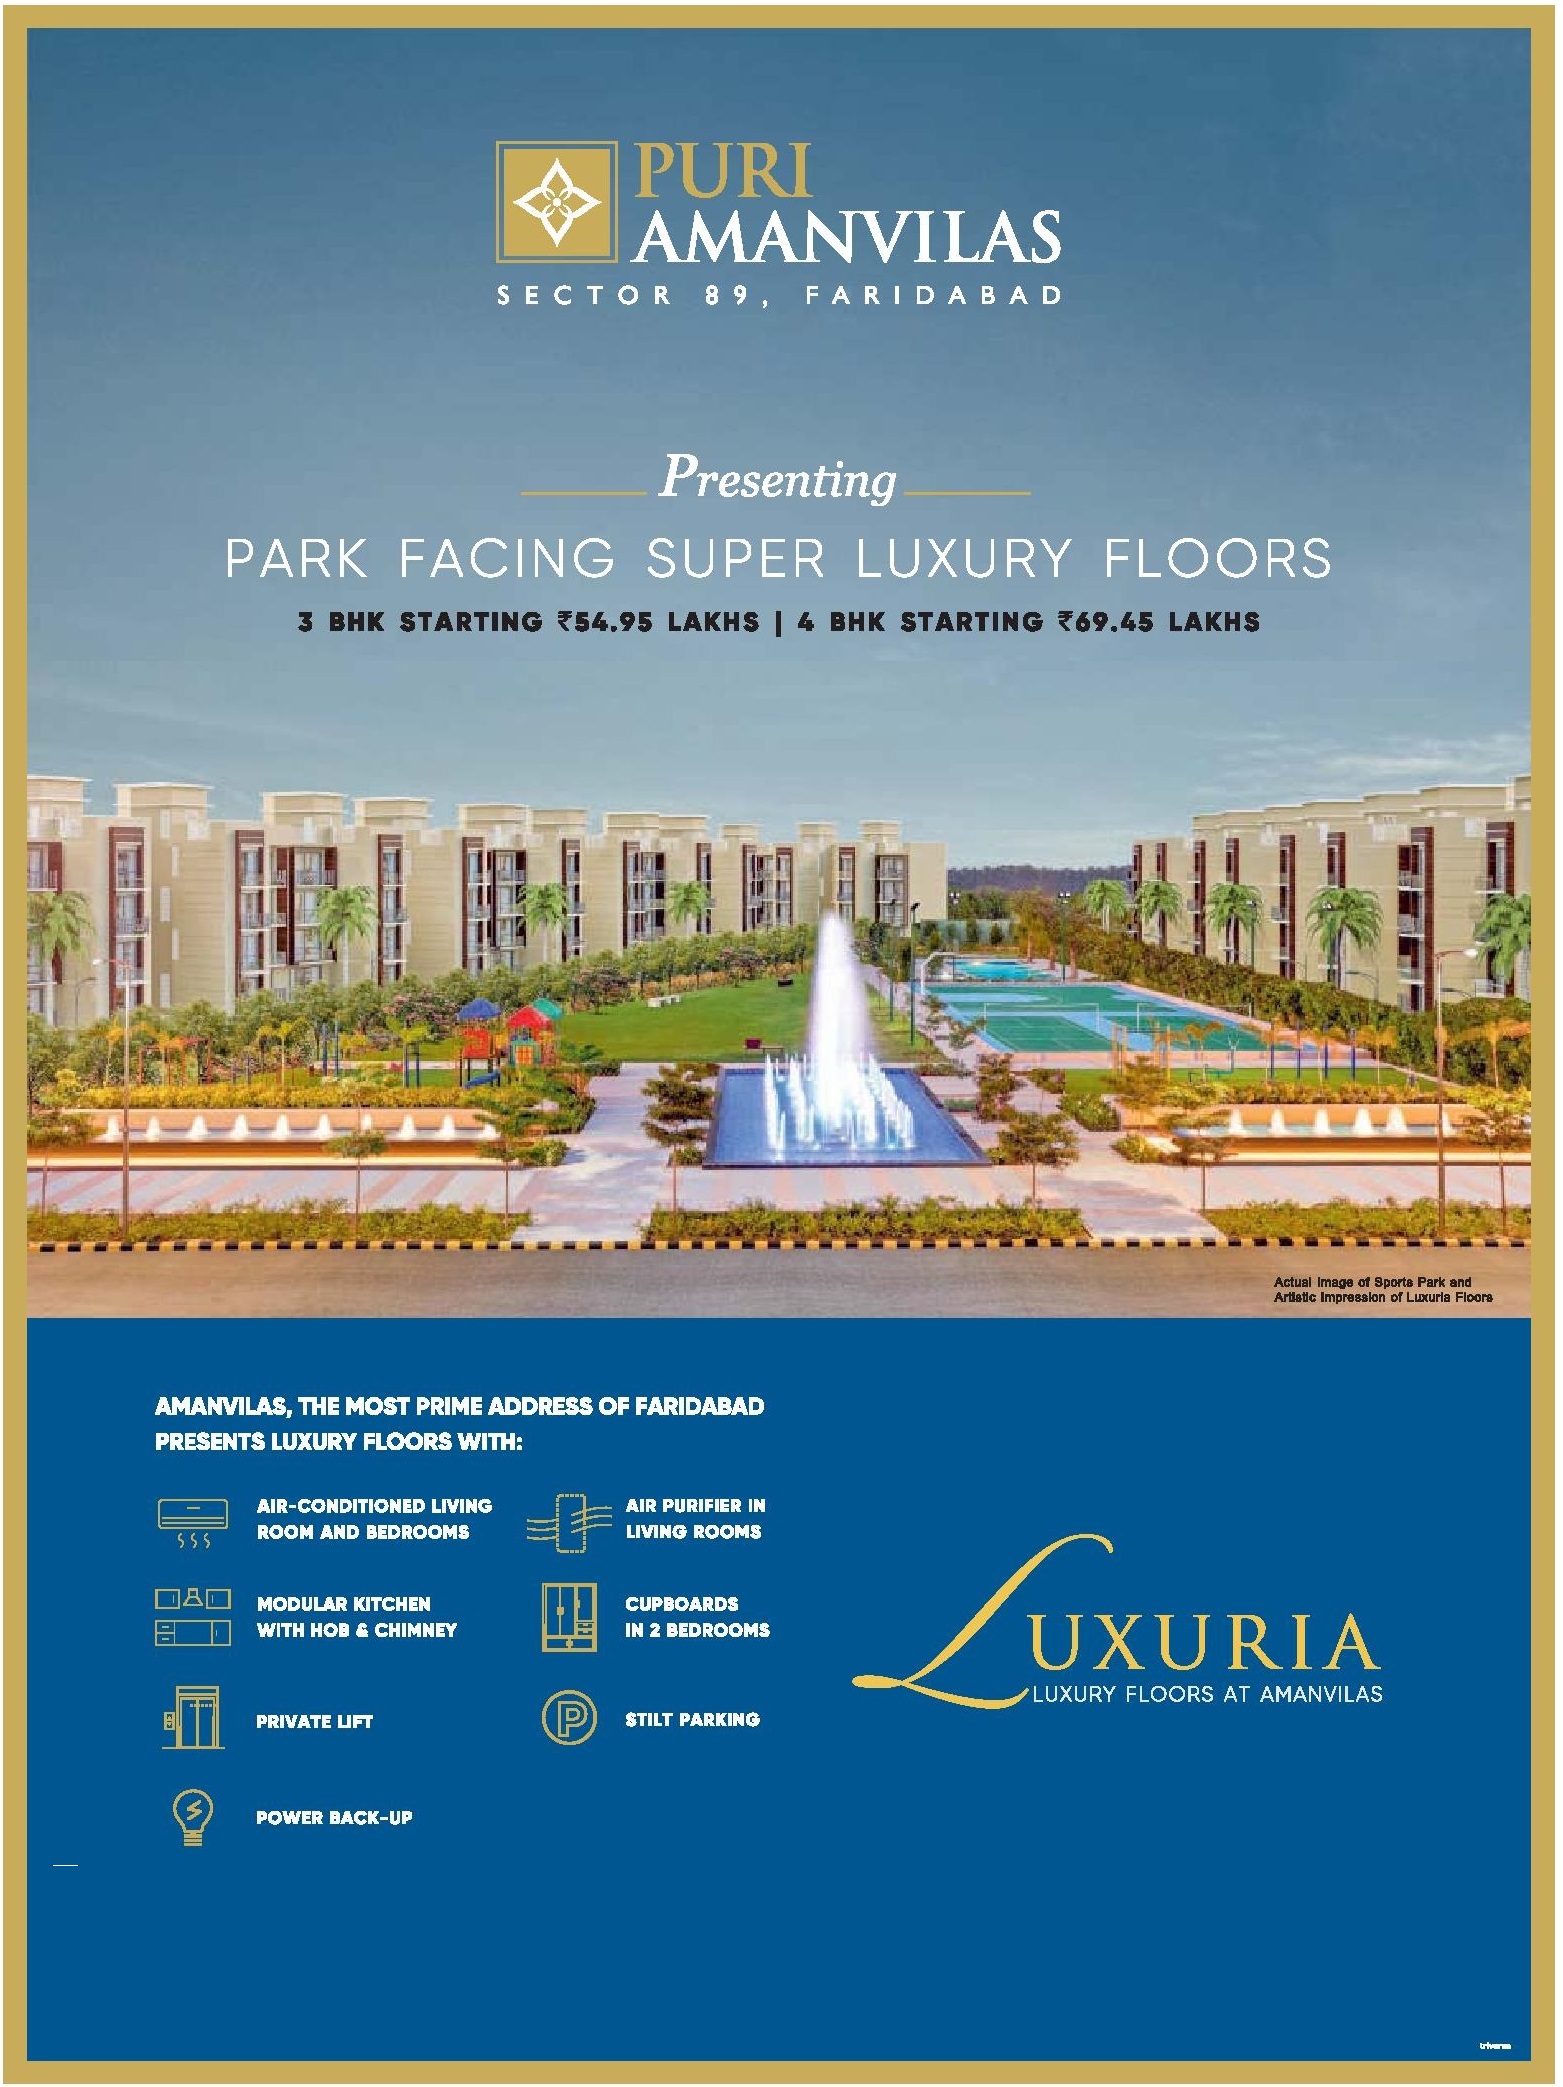 Presenting park facing super luxury floors at Puri Amanvilas in Faridabad Update